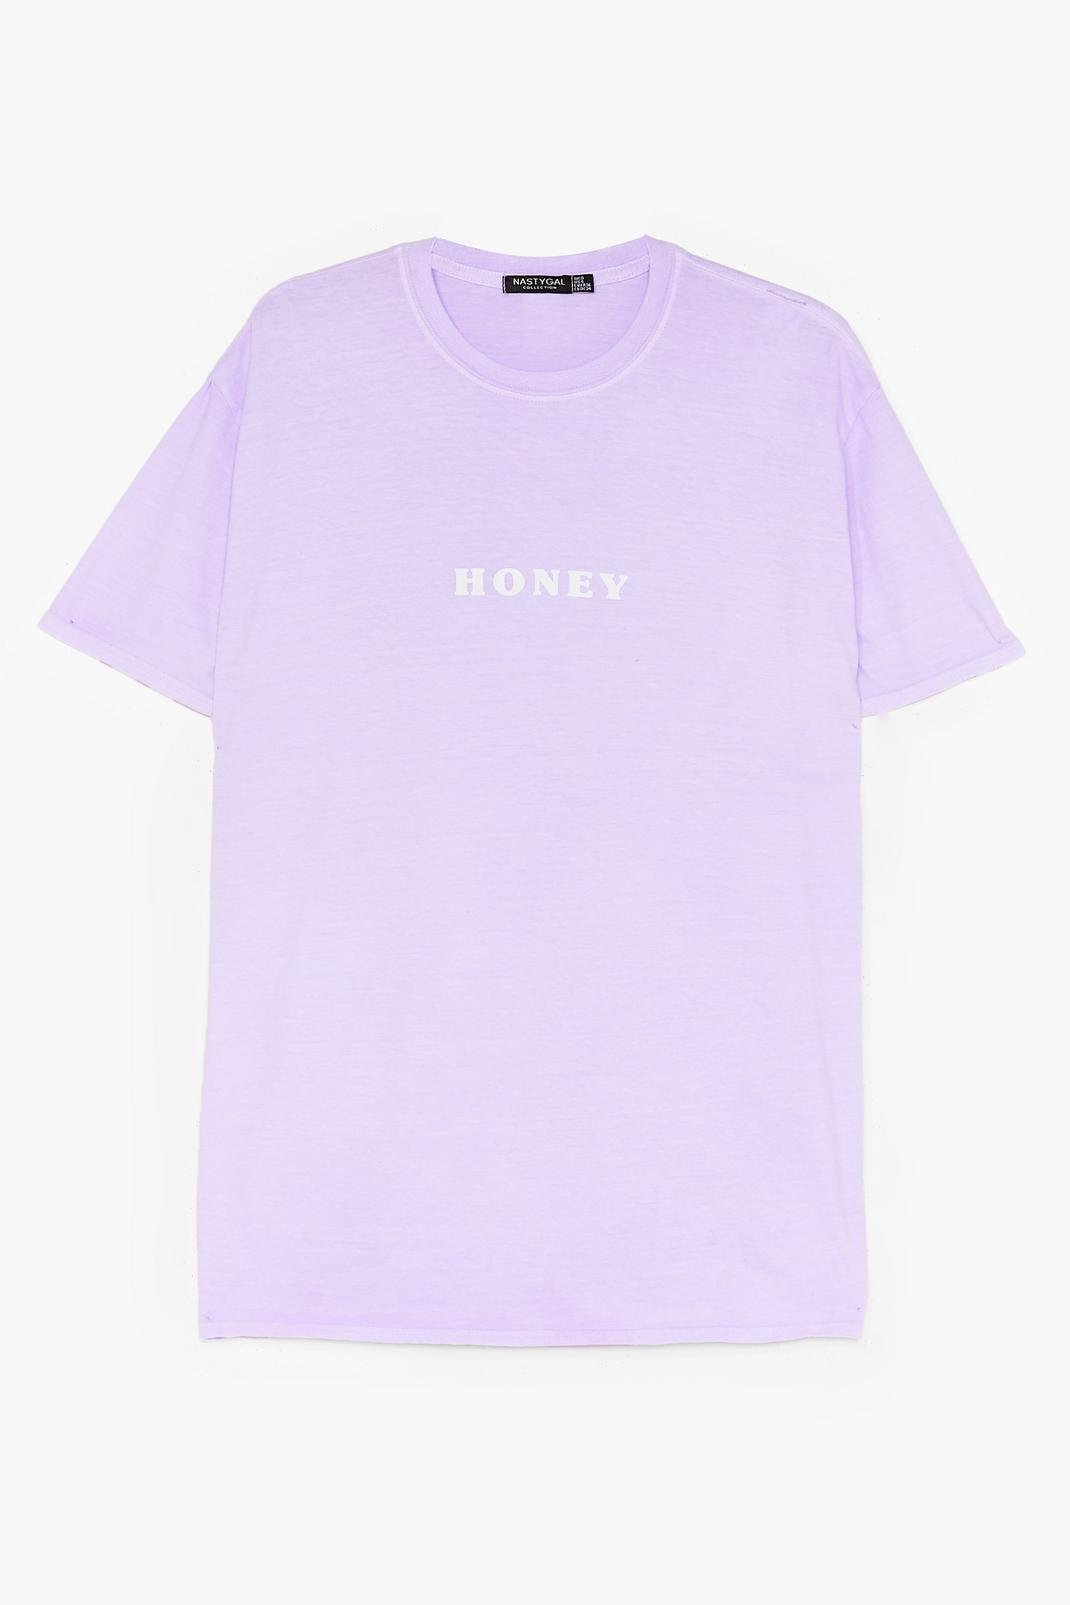 Honey Graphic T-Shirt image number 1